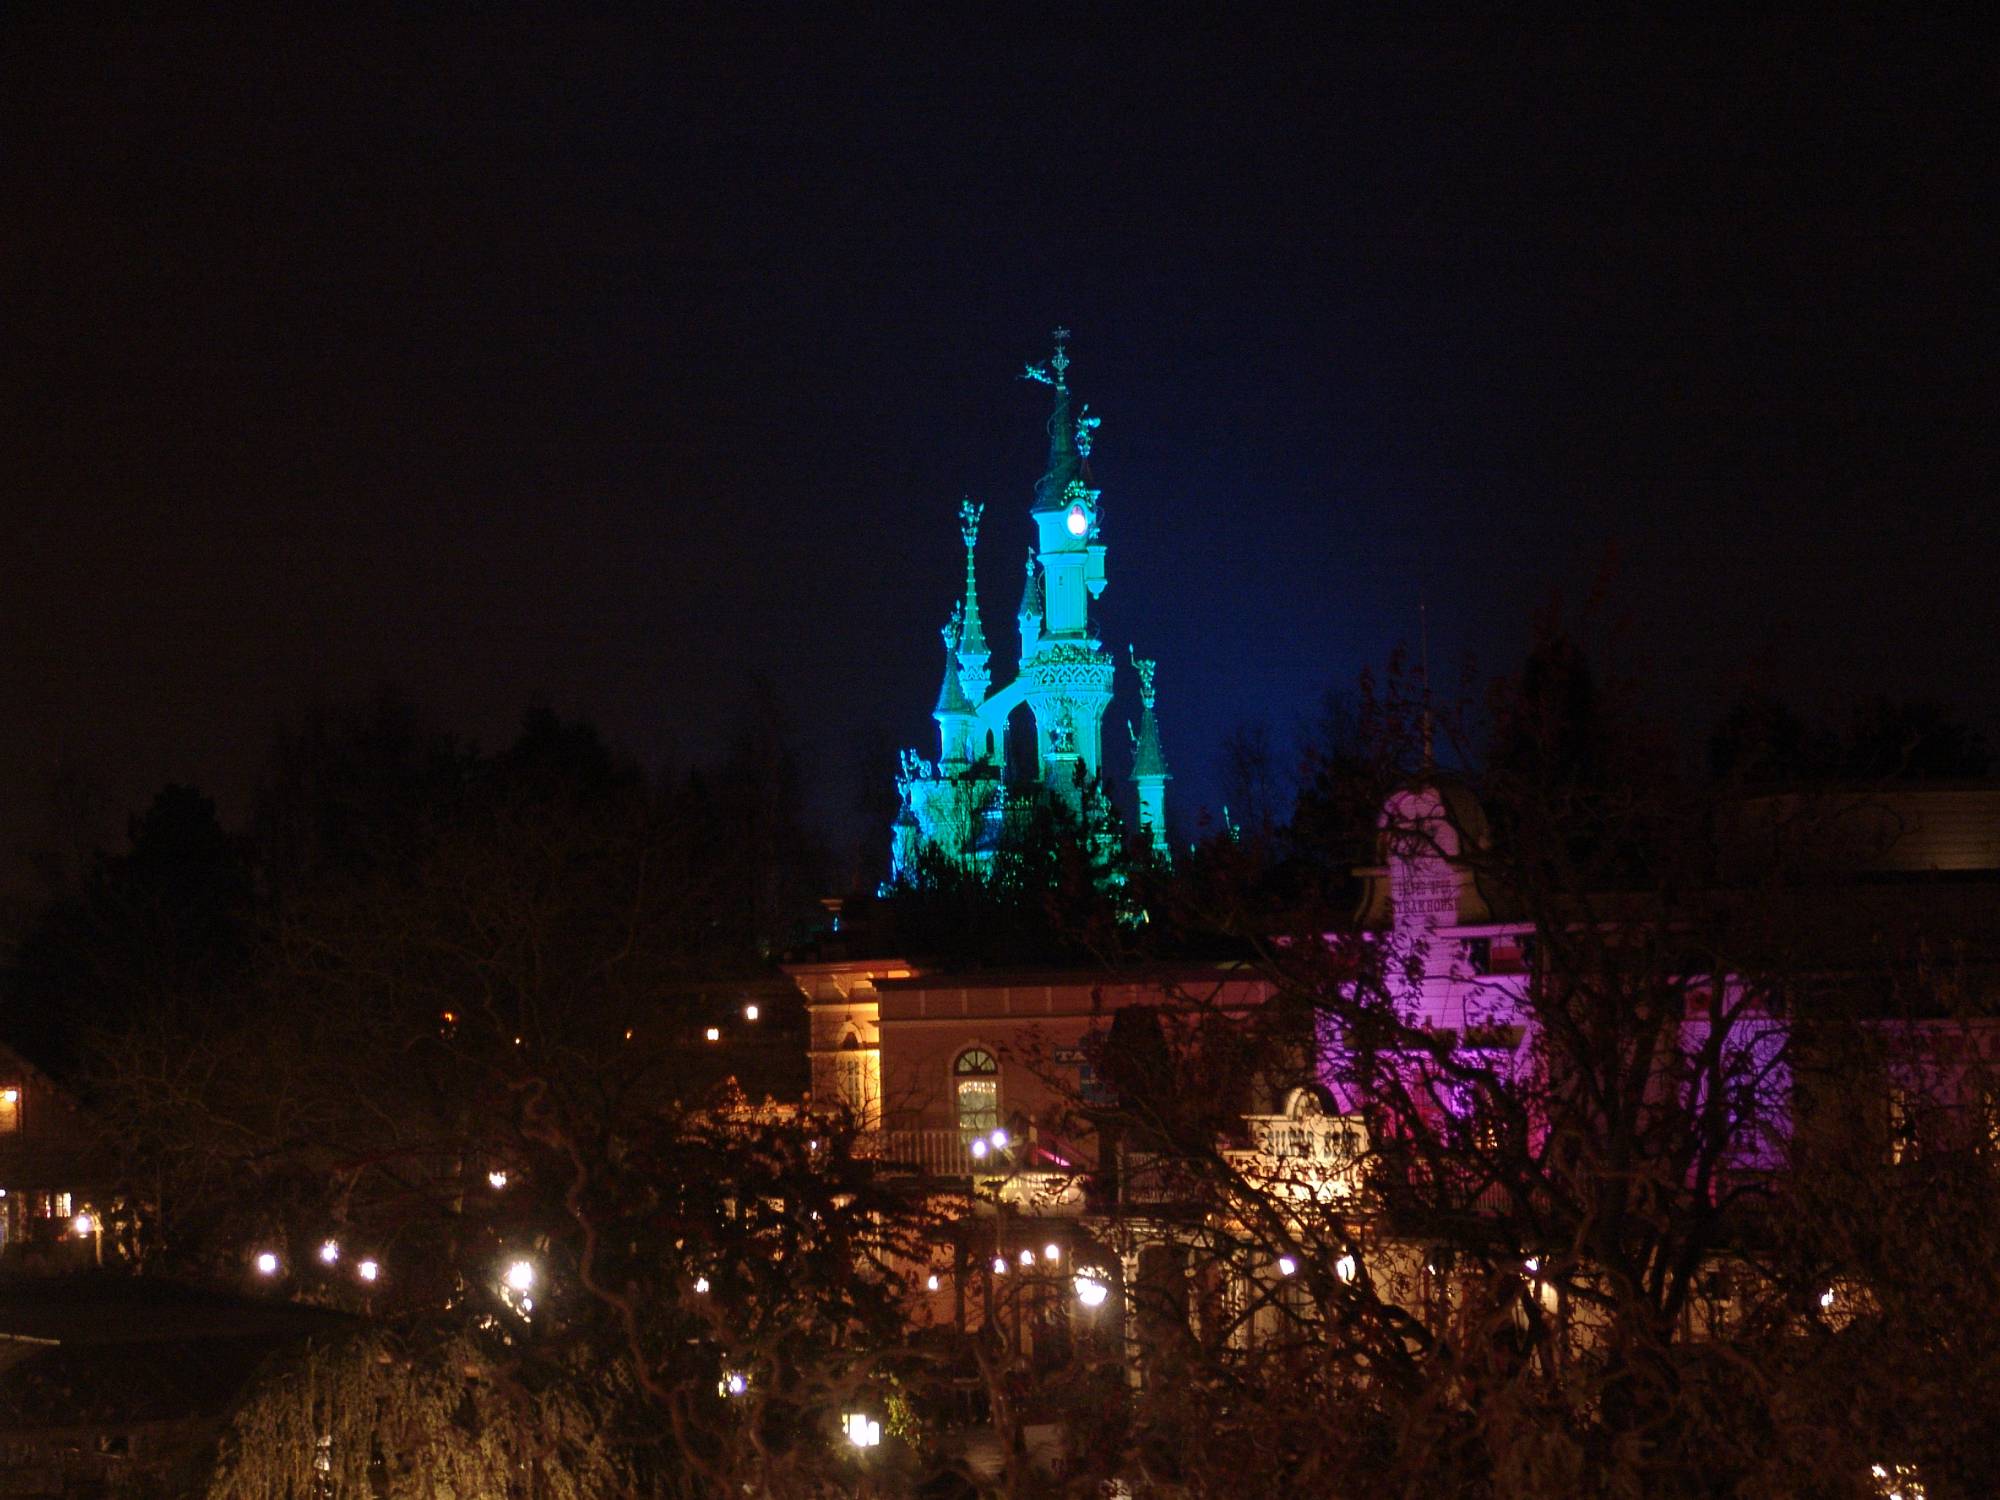 Disneyland Paris - Sleeping Beauty Castle at night